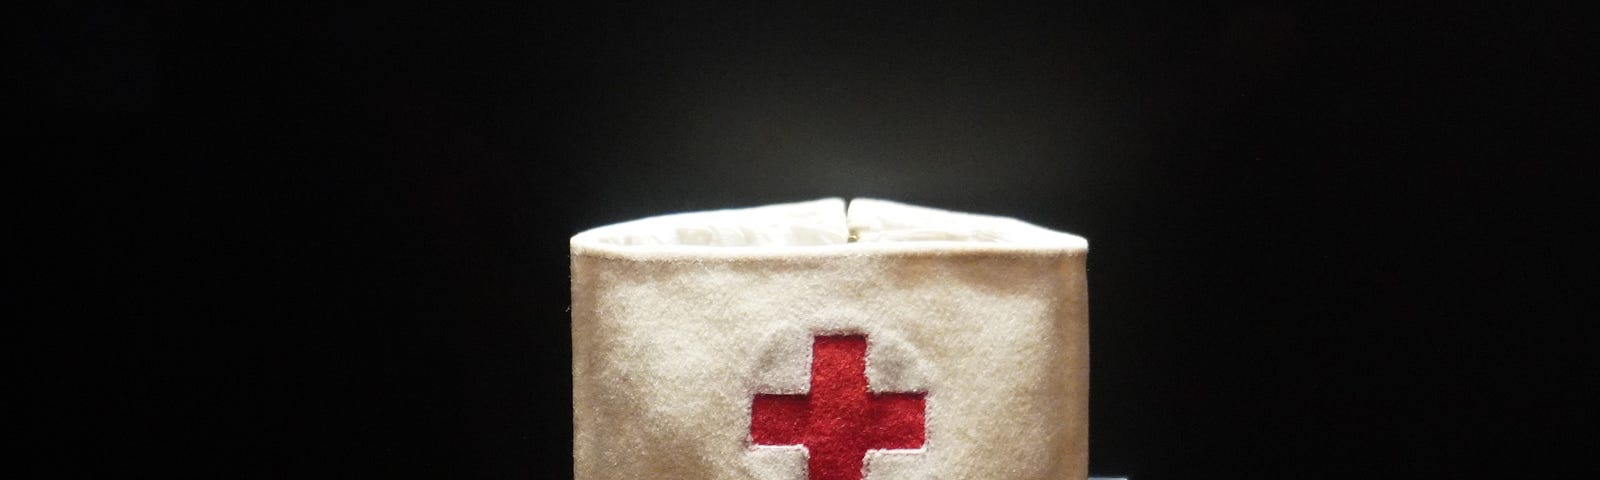 First aid kit, medicine